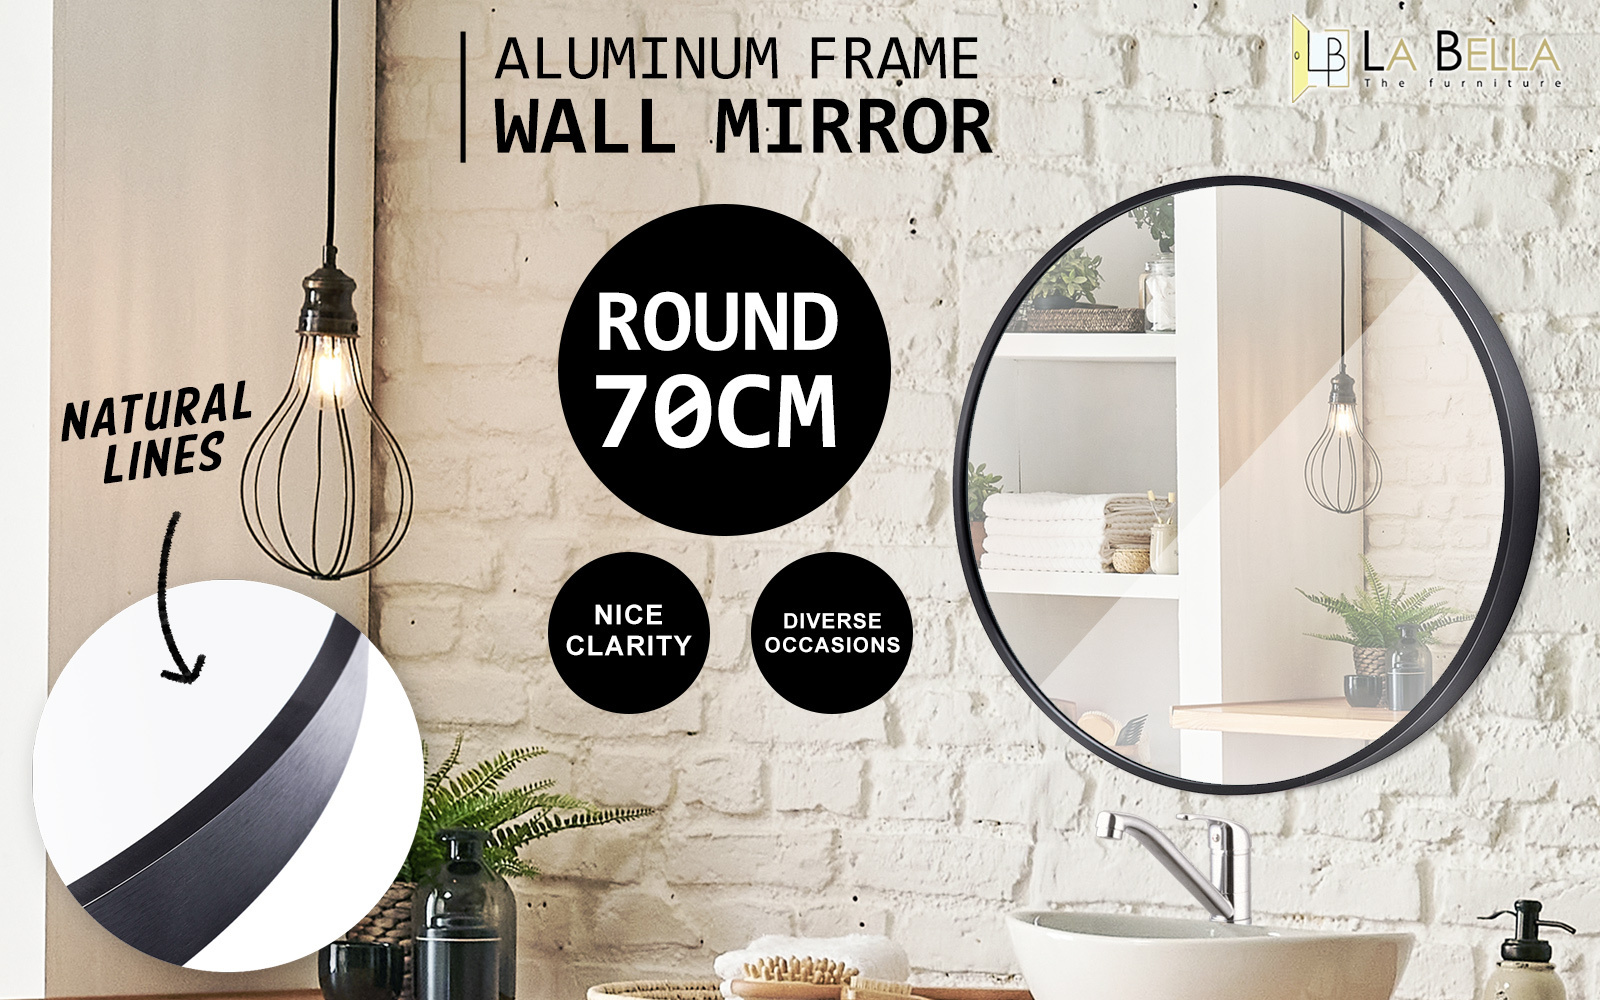 2 Set Wall Mirror Round Aluminum Frame Bathroom 70cm BLACK